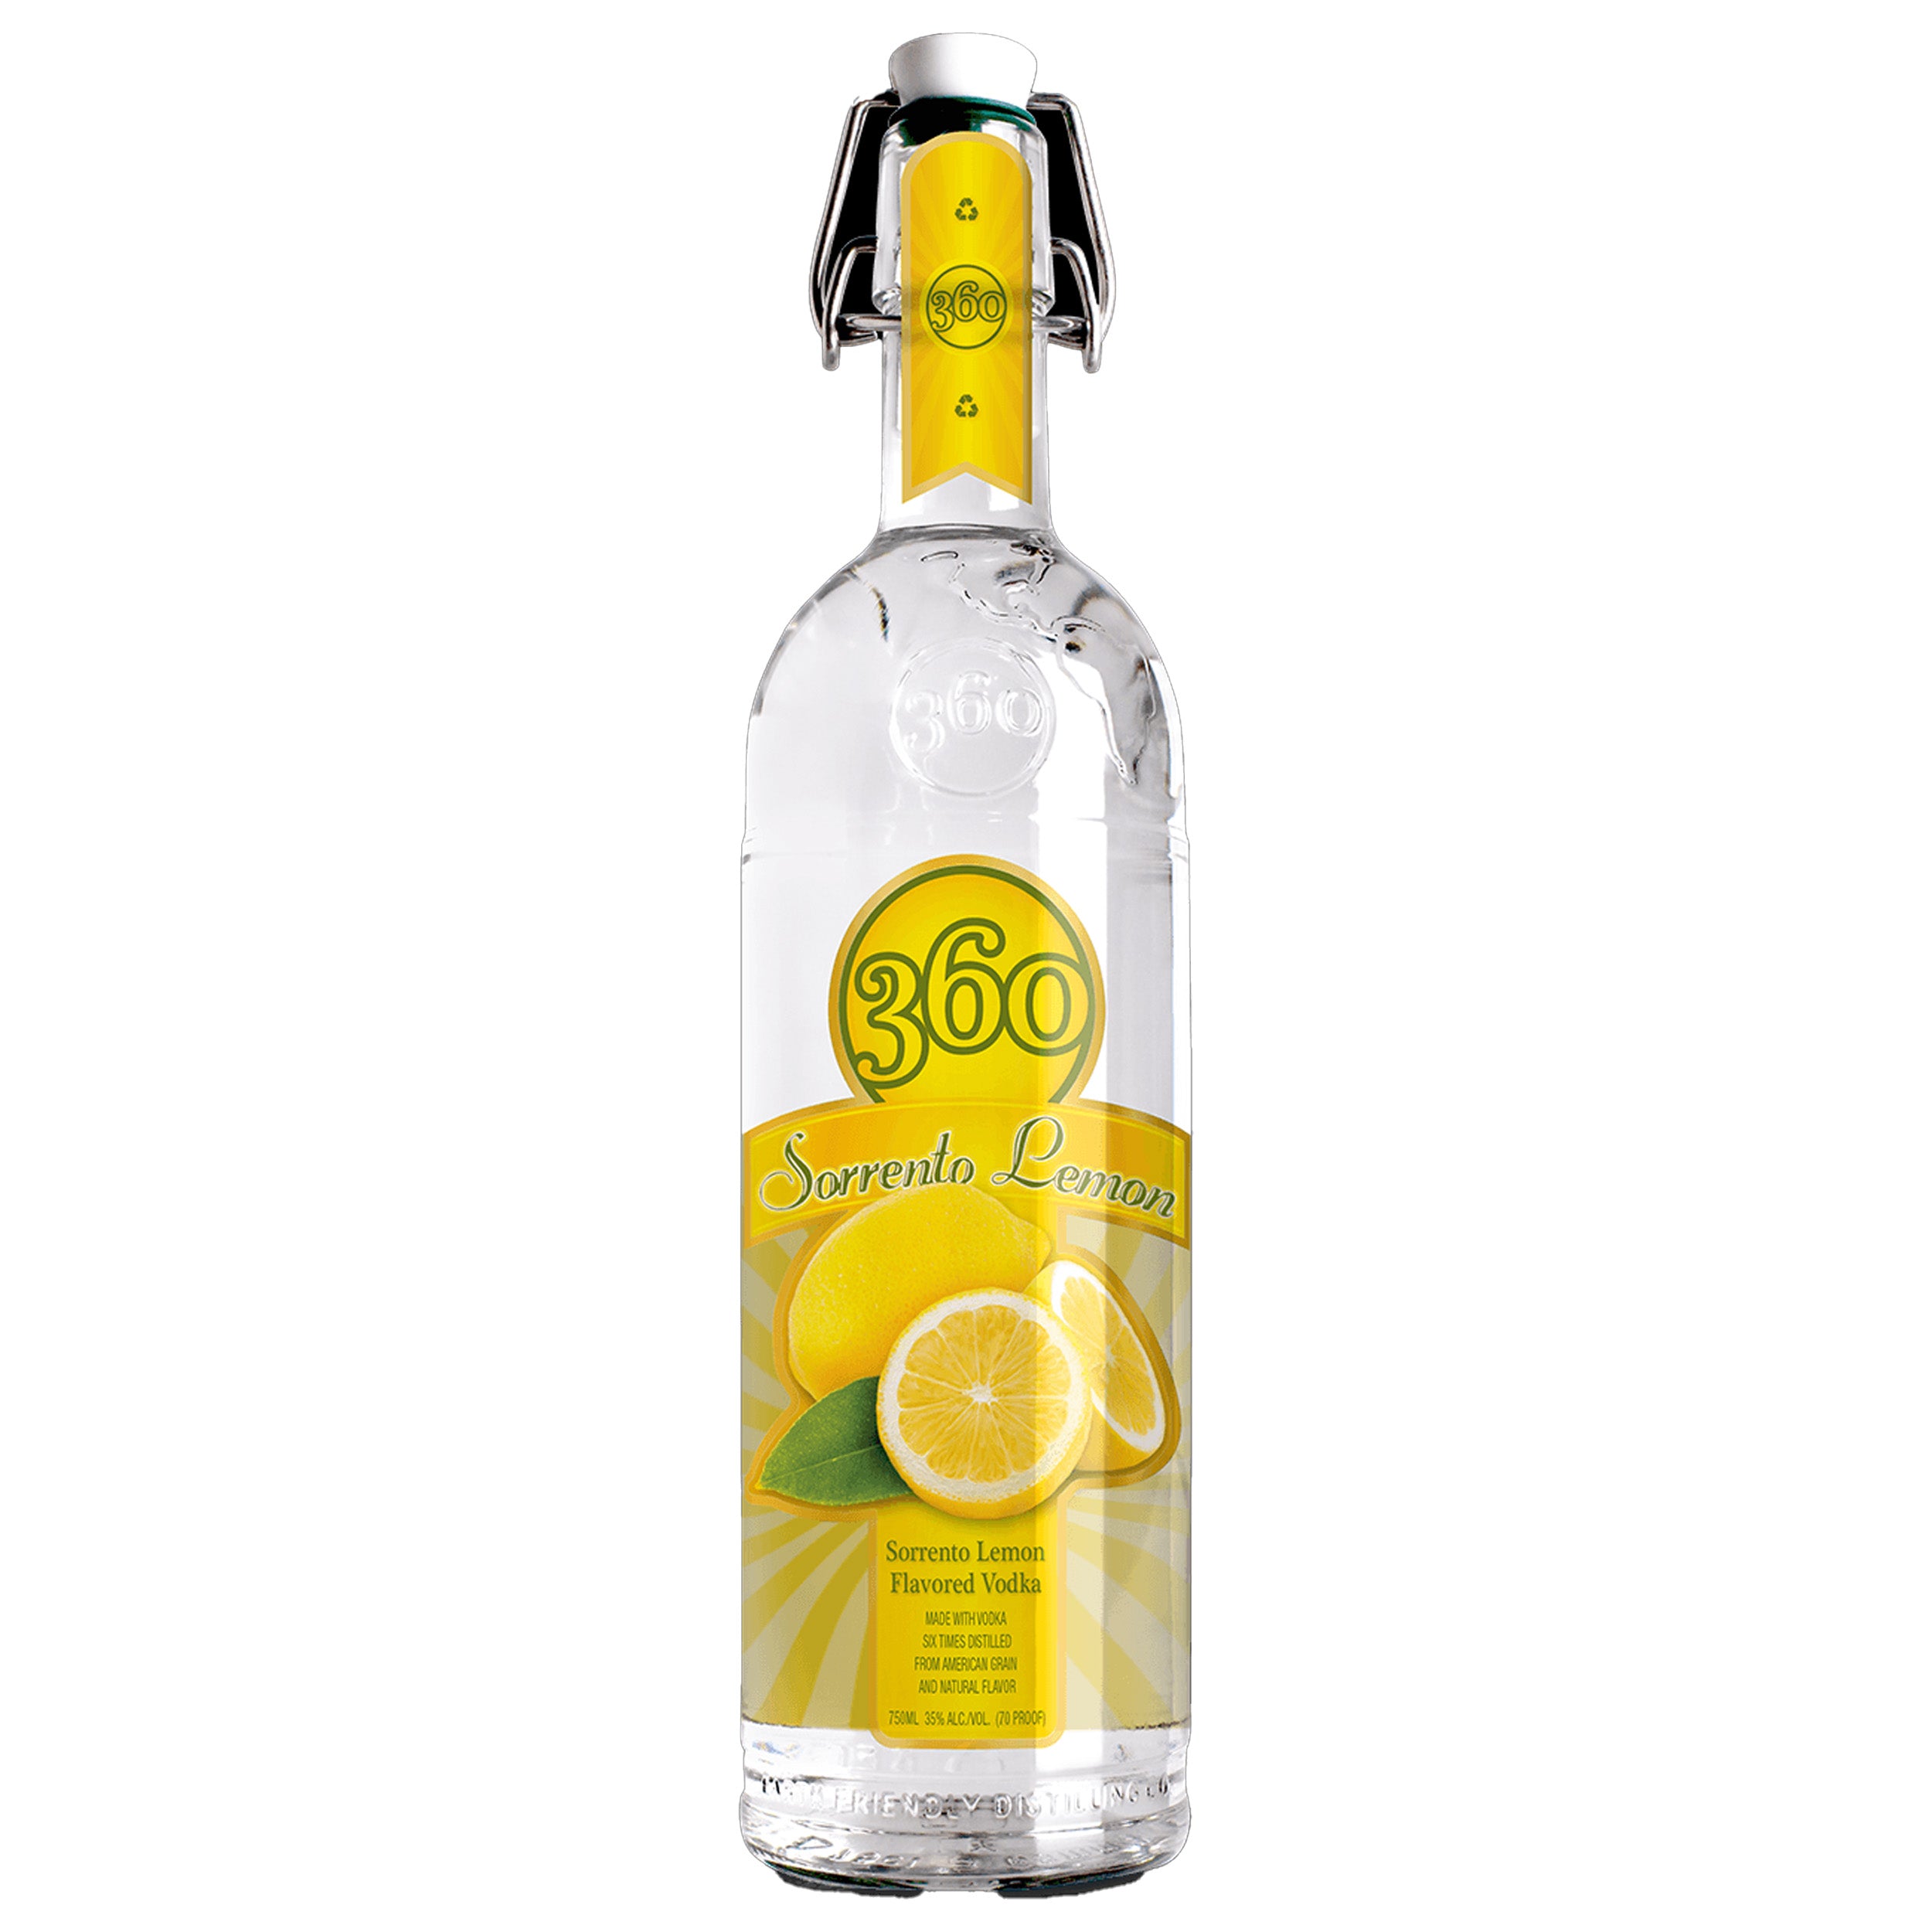 360 Sorrento Lemon Vodka